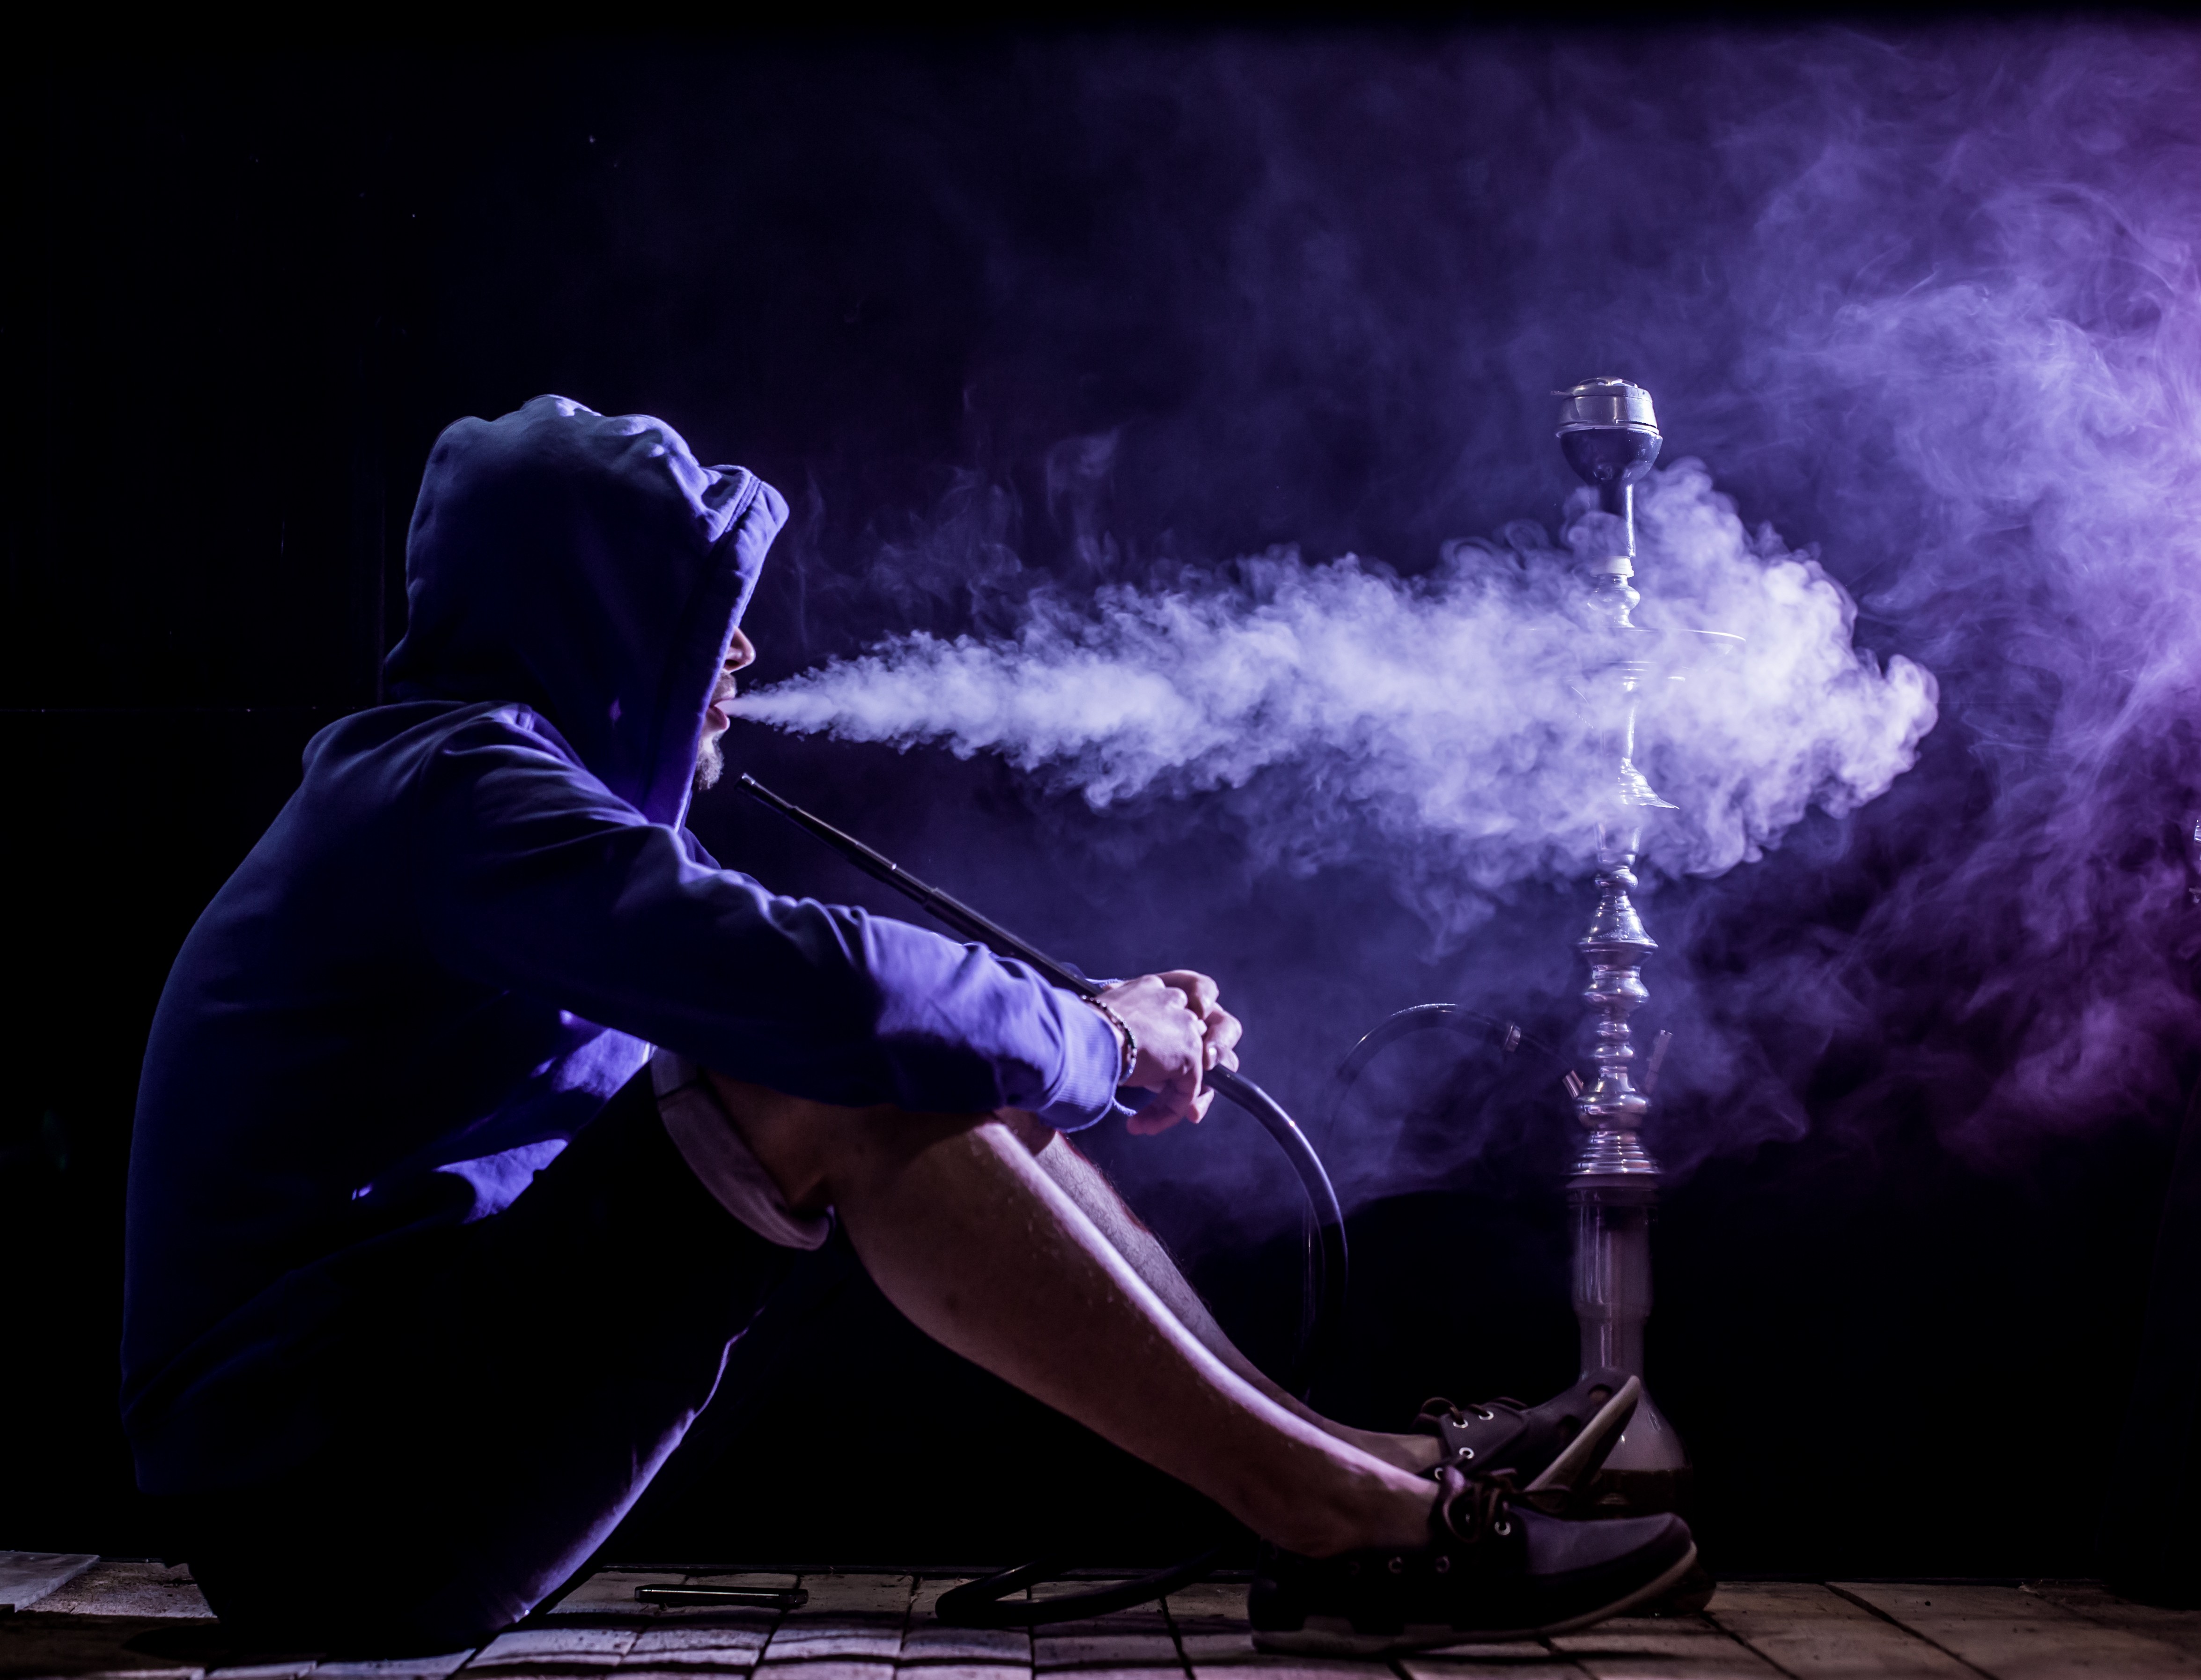 a man smokes a hookah on a black background, beautiful lighting